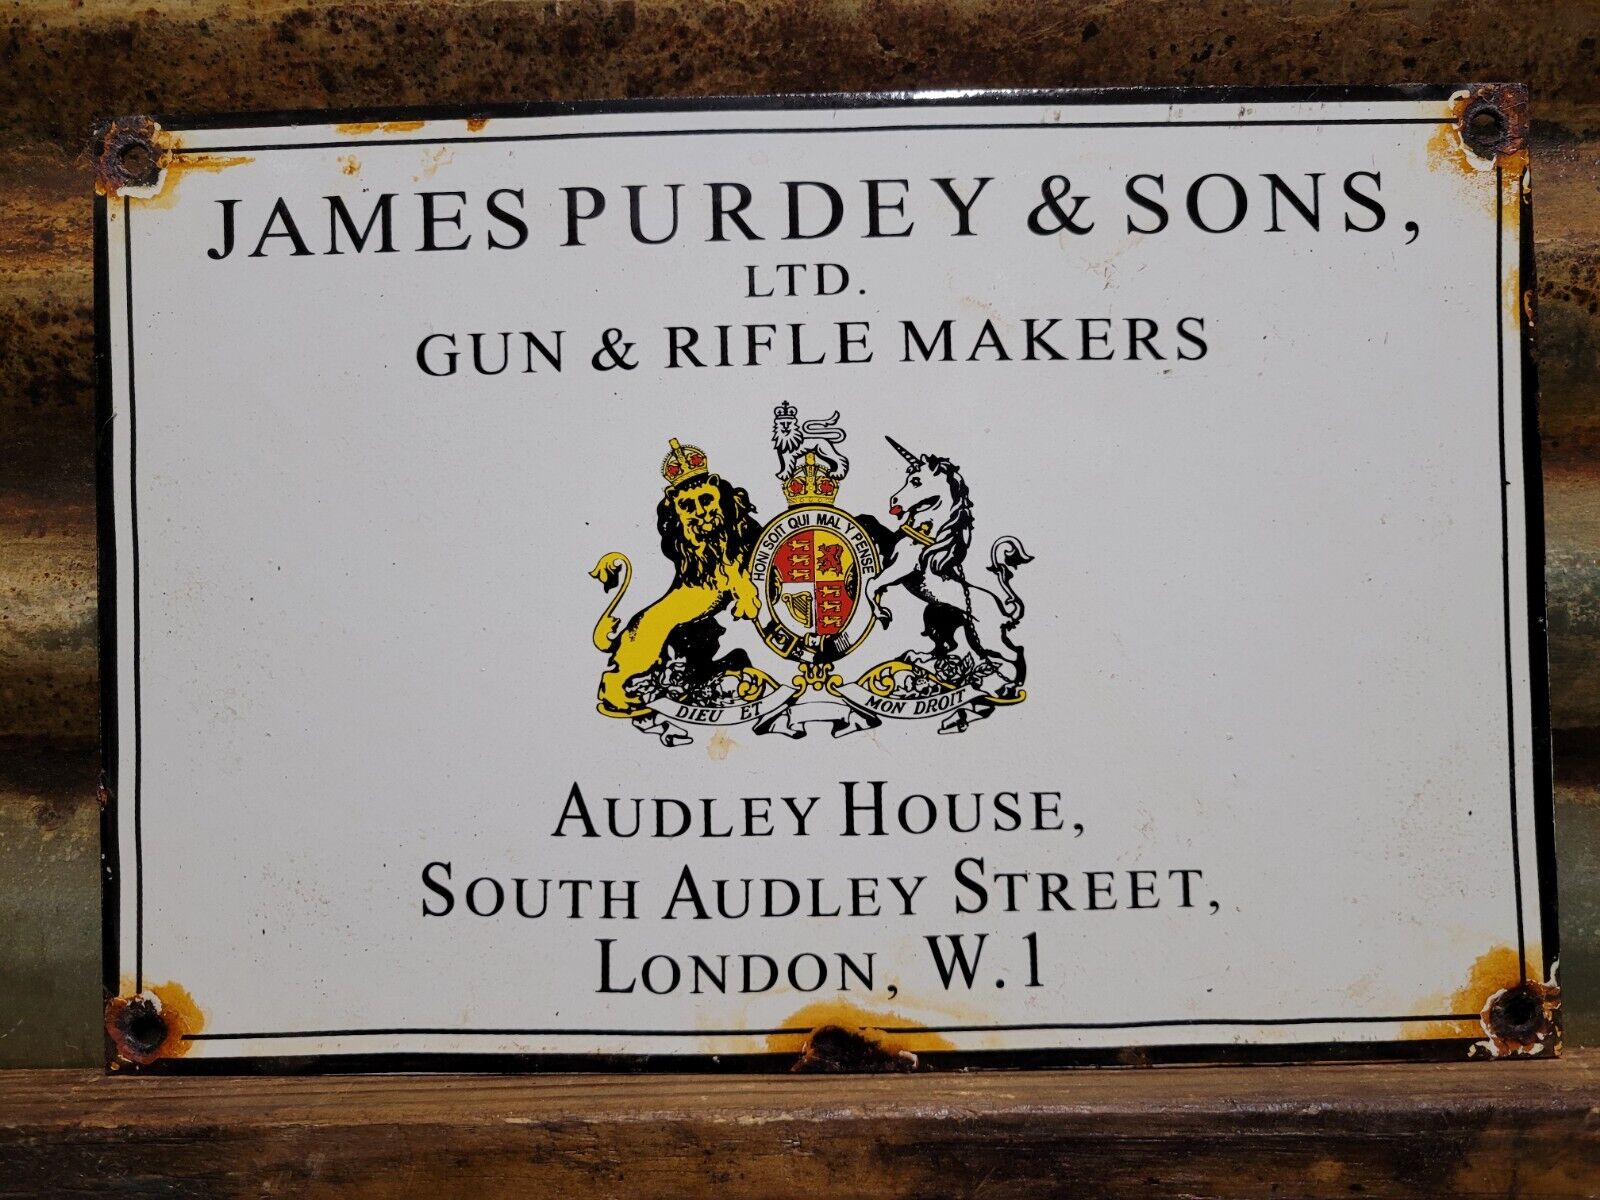 VINTAGE JAMES PURDEY & SON PORCELAIN SIGN GUN RIFLE MAKER AMMUNITION LONDON UK